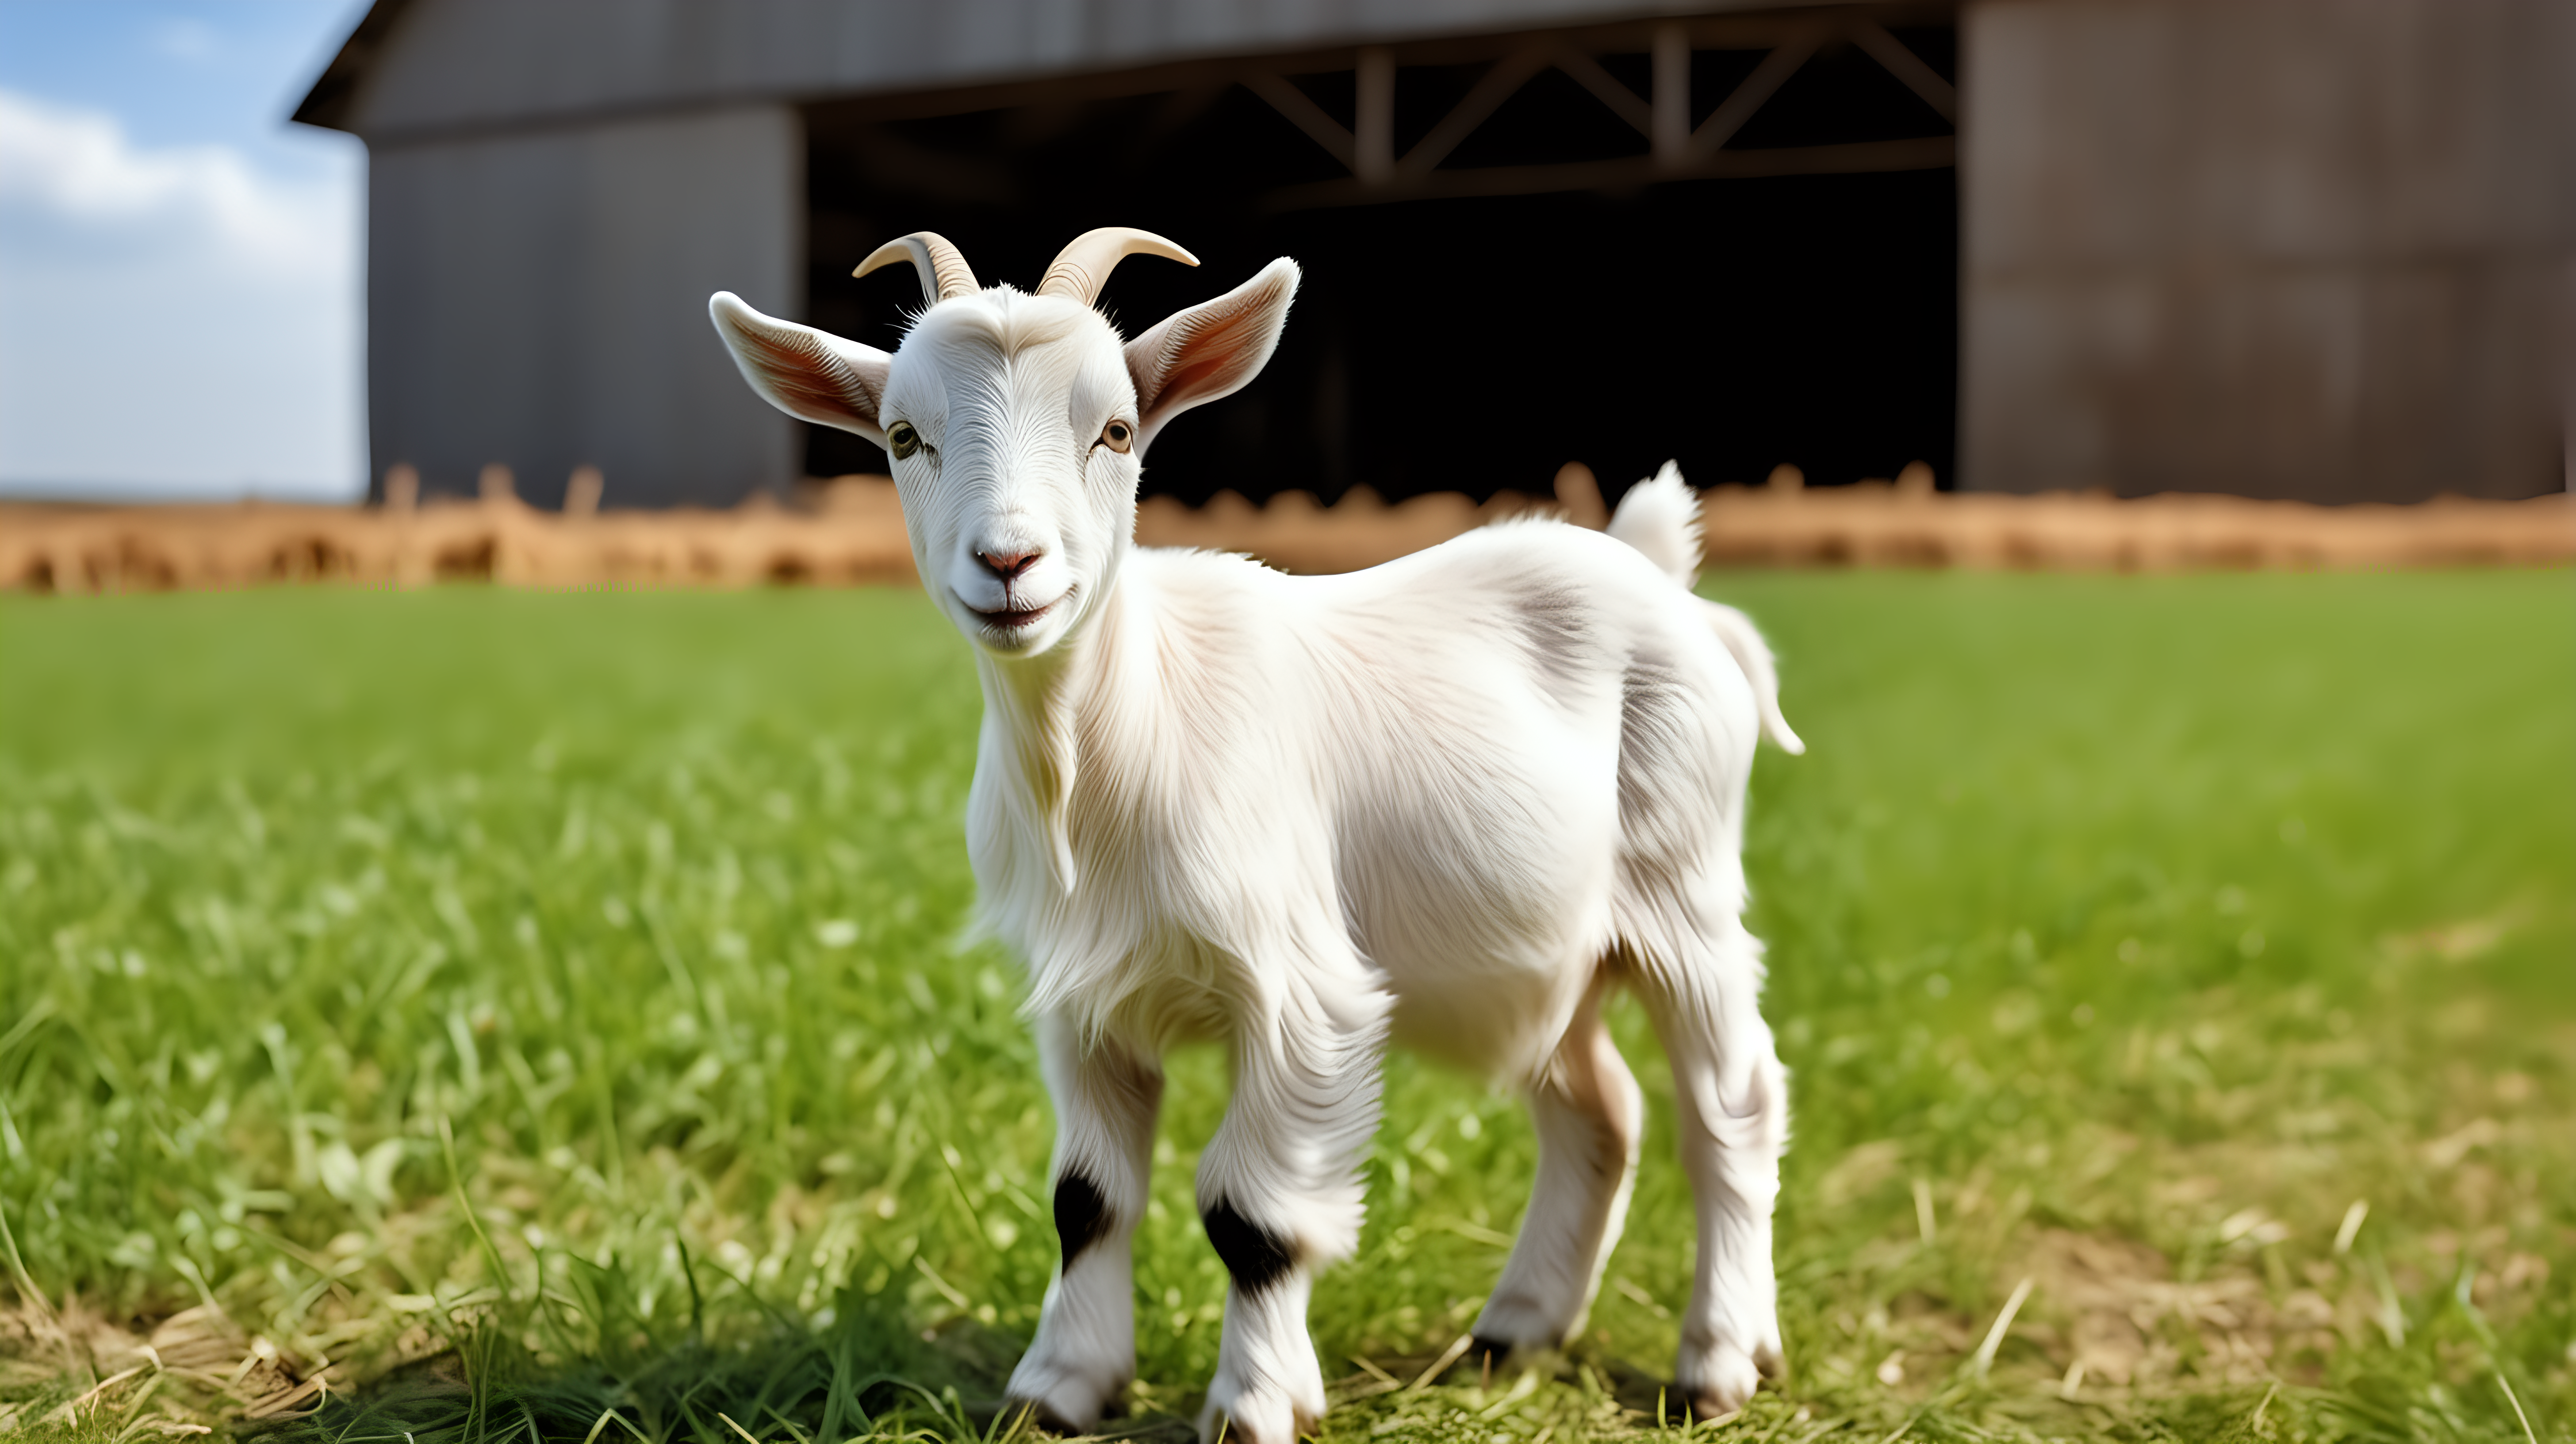 Little goat in field farm barn background isolated